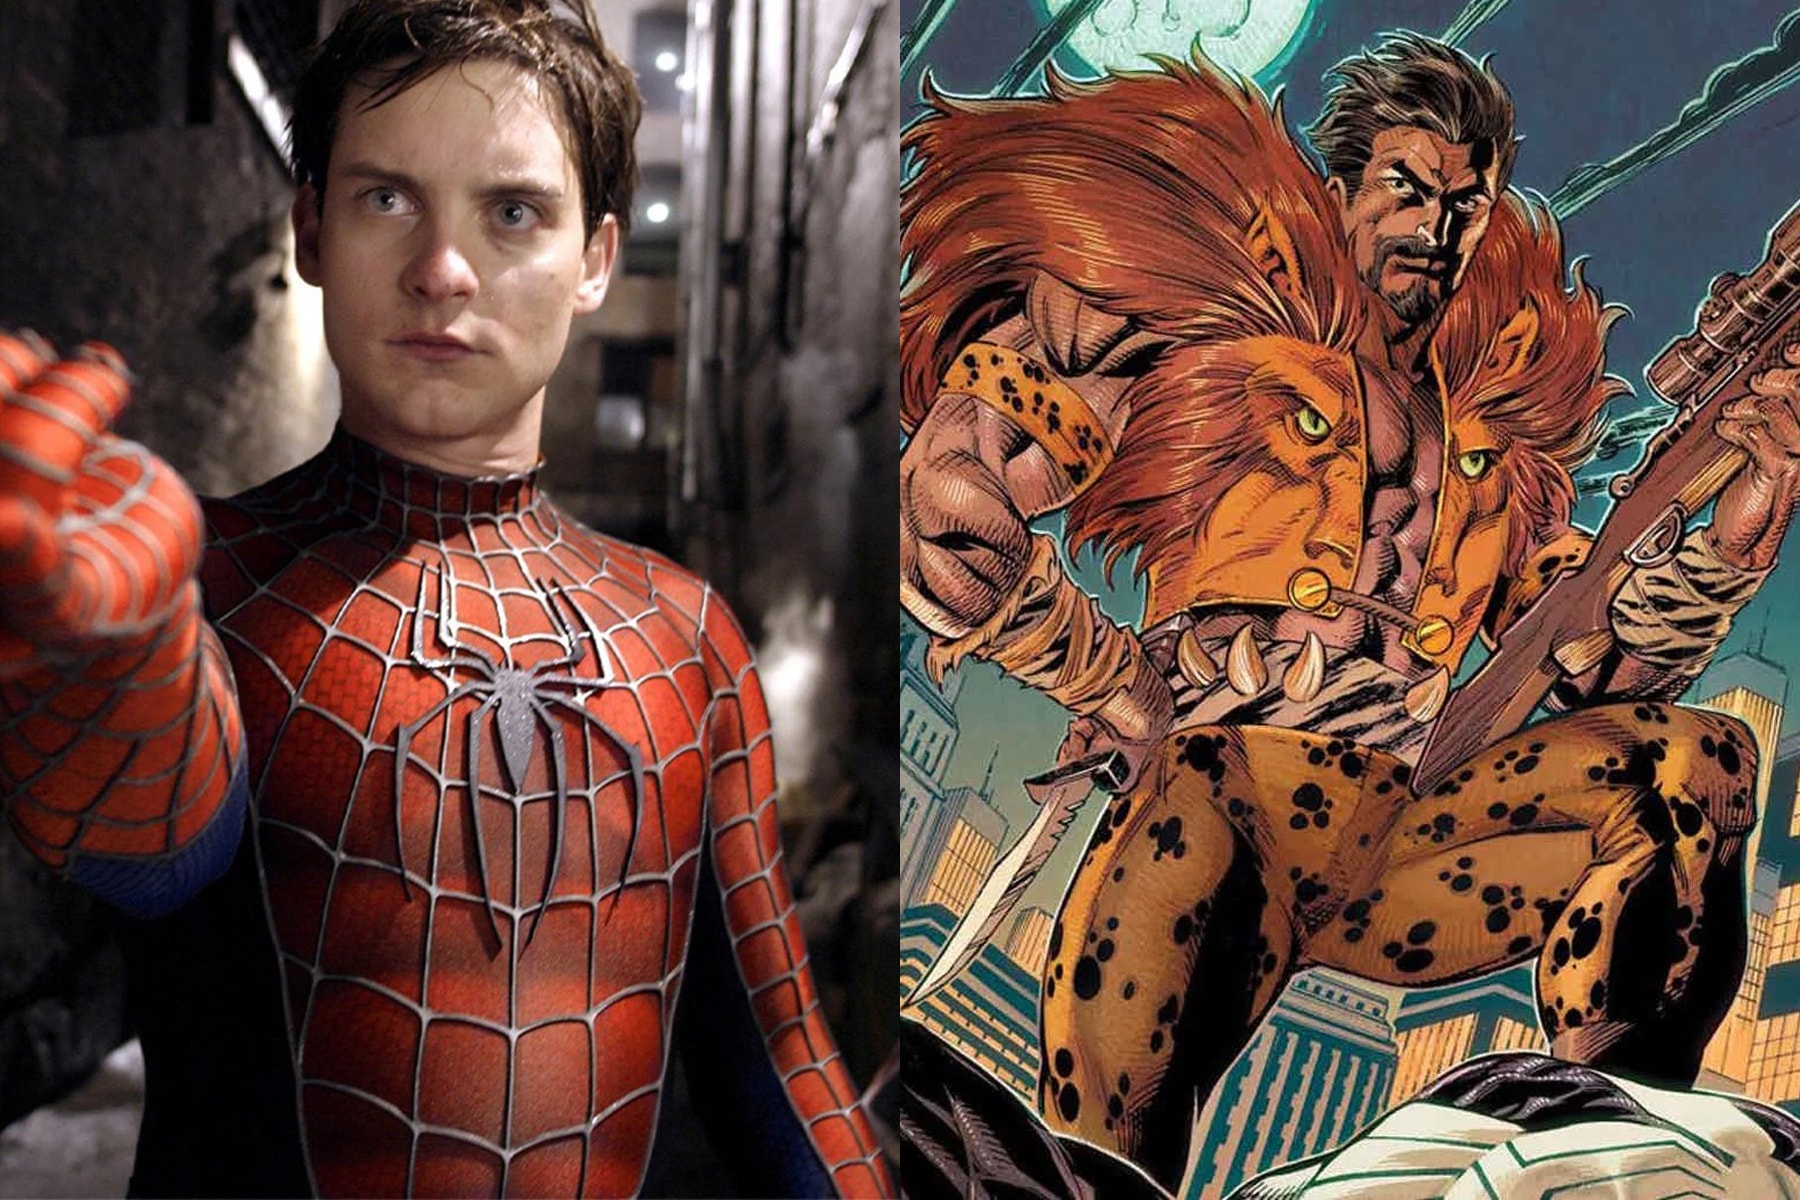 導演 Sam Raimi 透露 Tobey Maguire 版本《Spider-Man》第四部續集反派人選